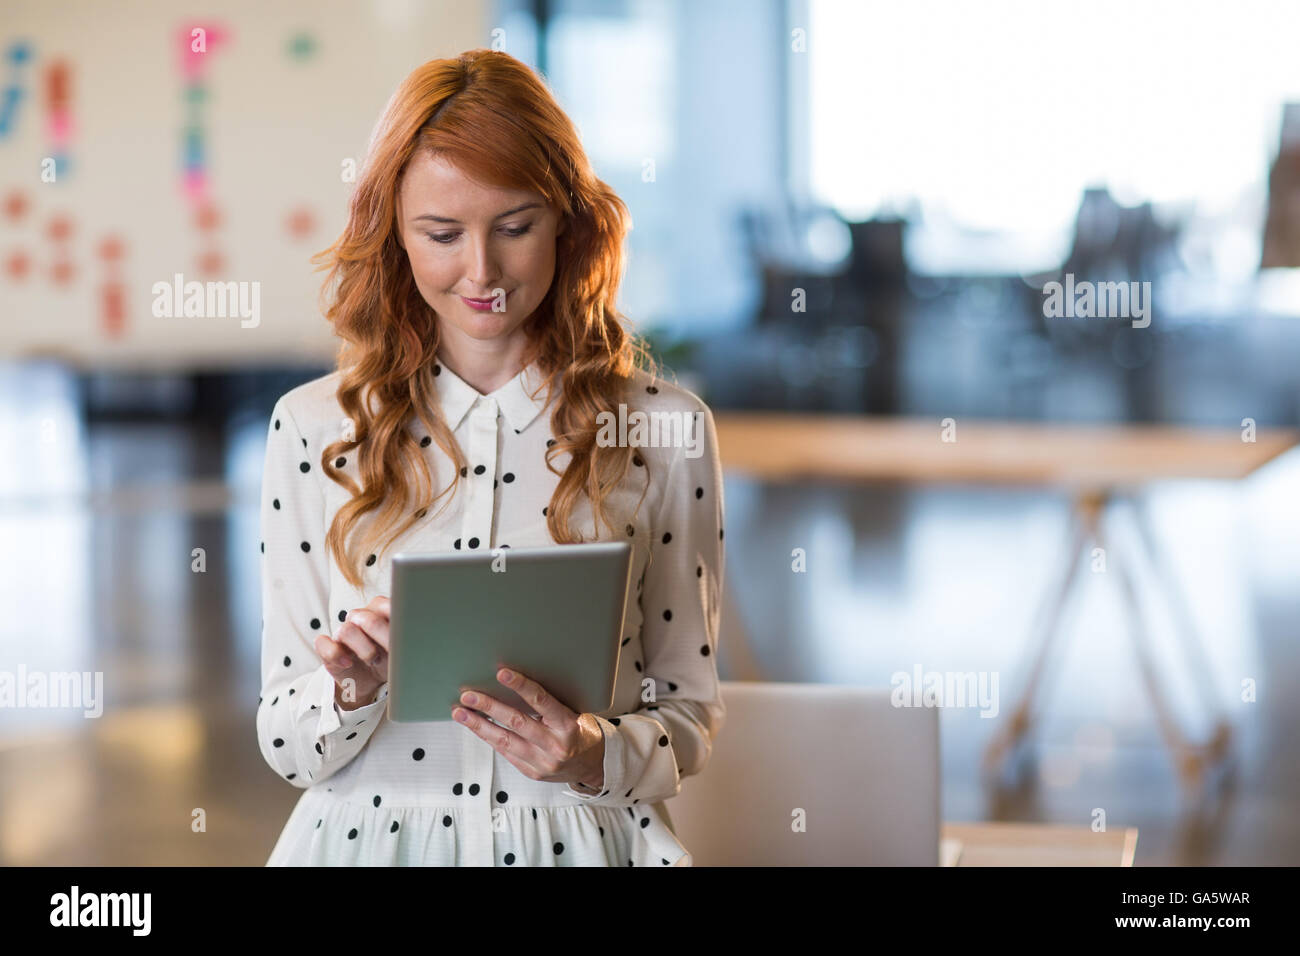 Woman using digital tablet Banque D'Images